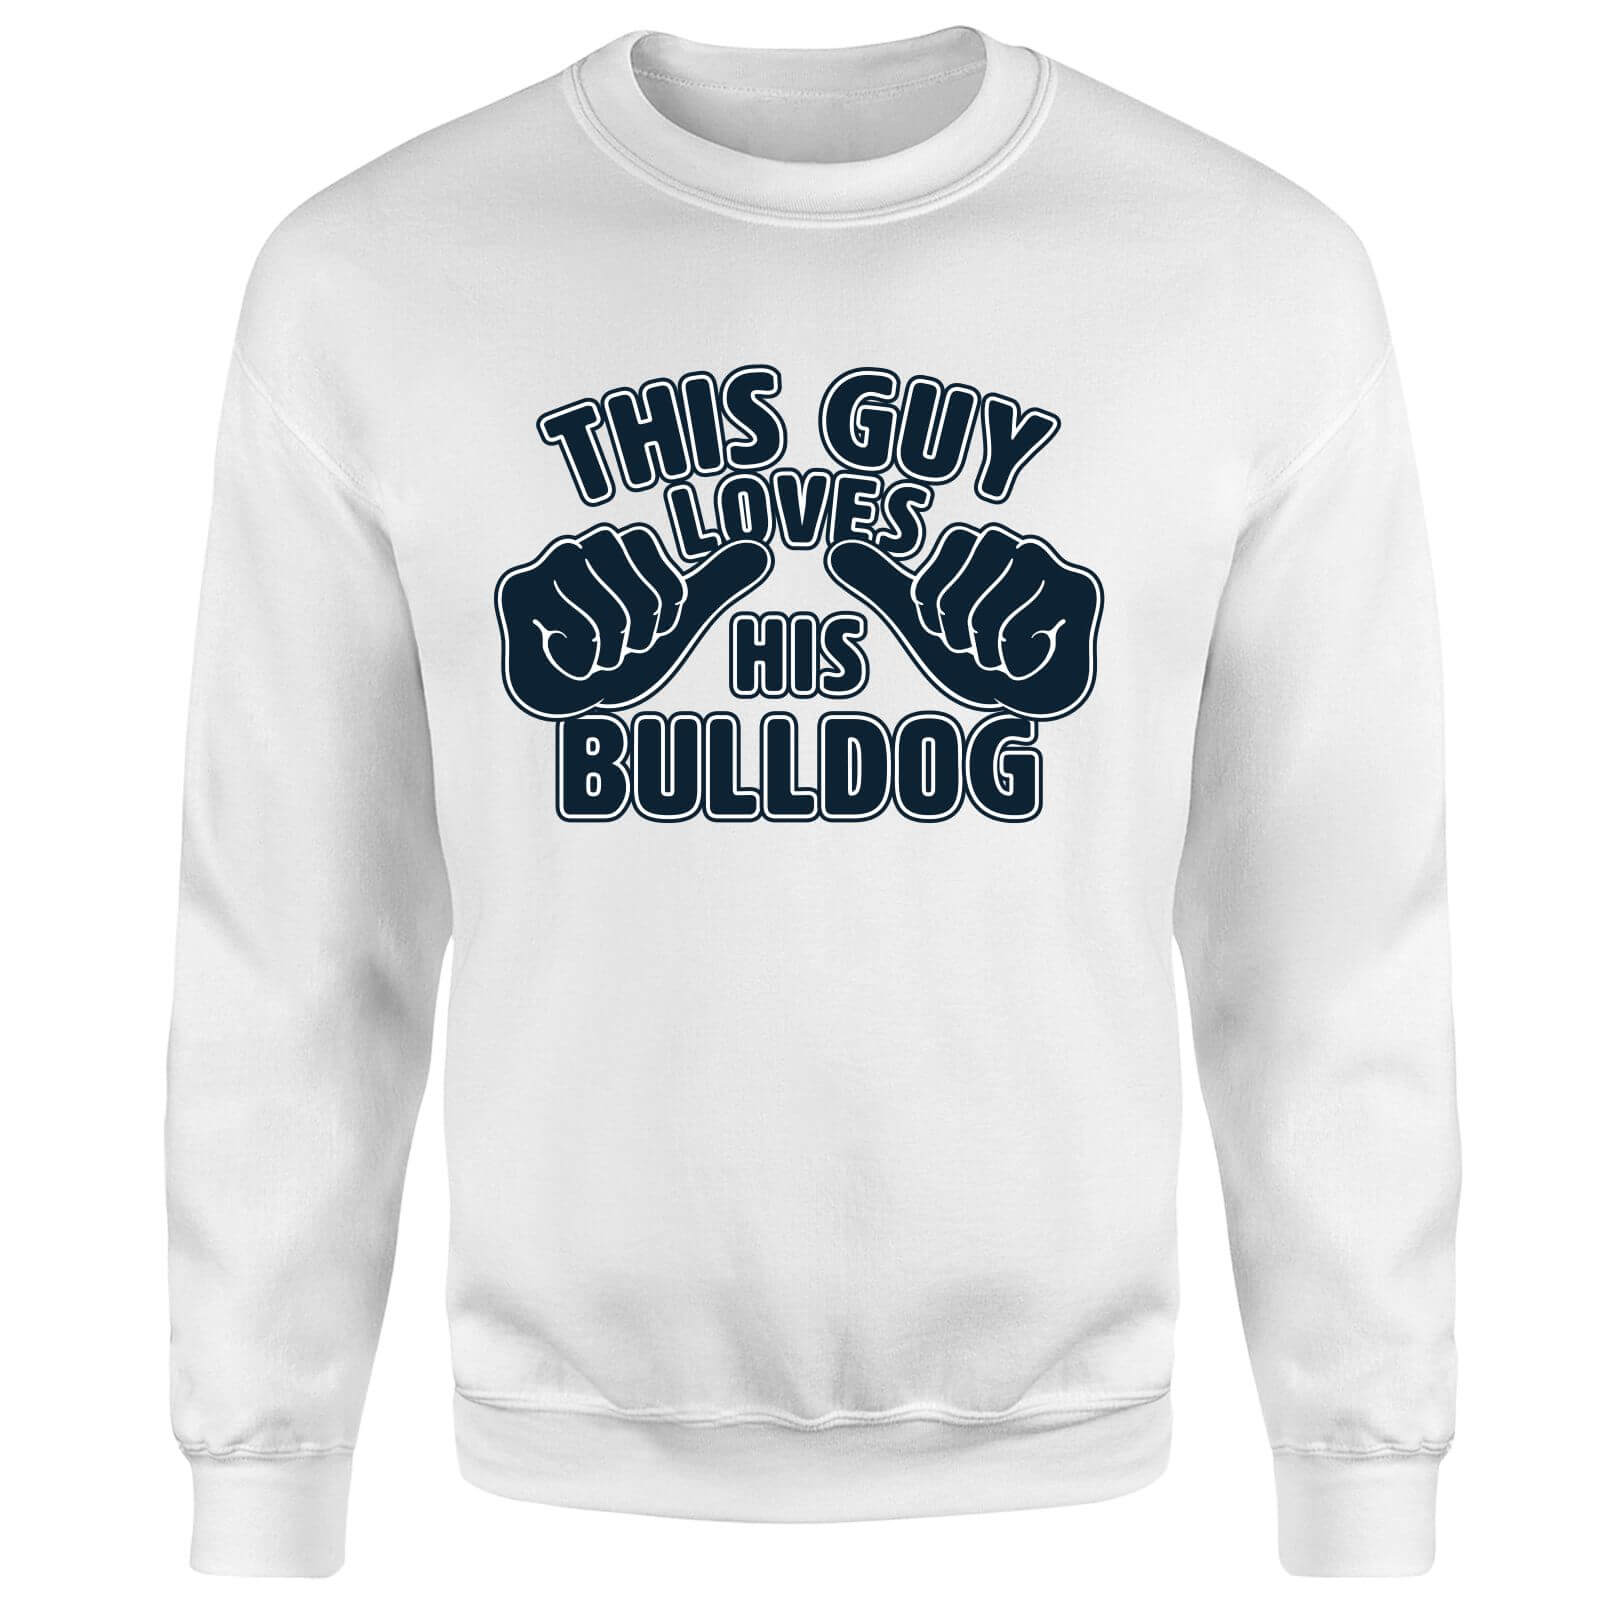 This Guy Loves His Bulldog Sweatshirt - White - S - White